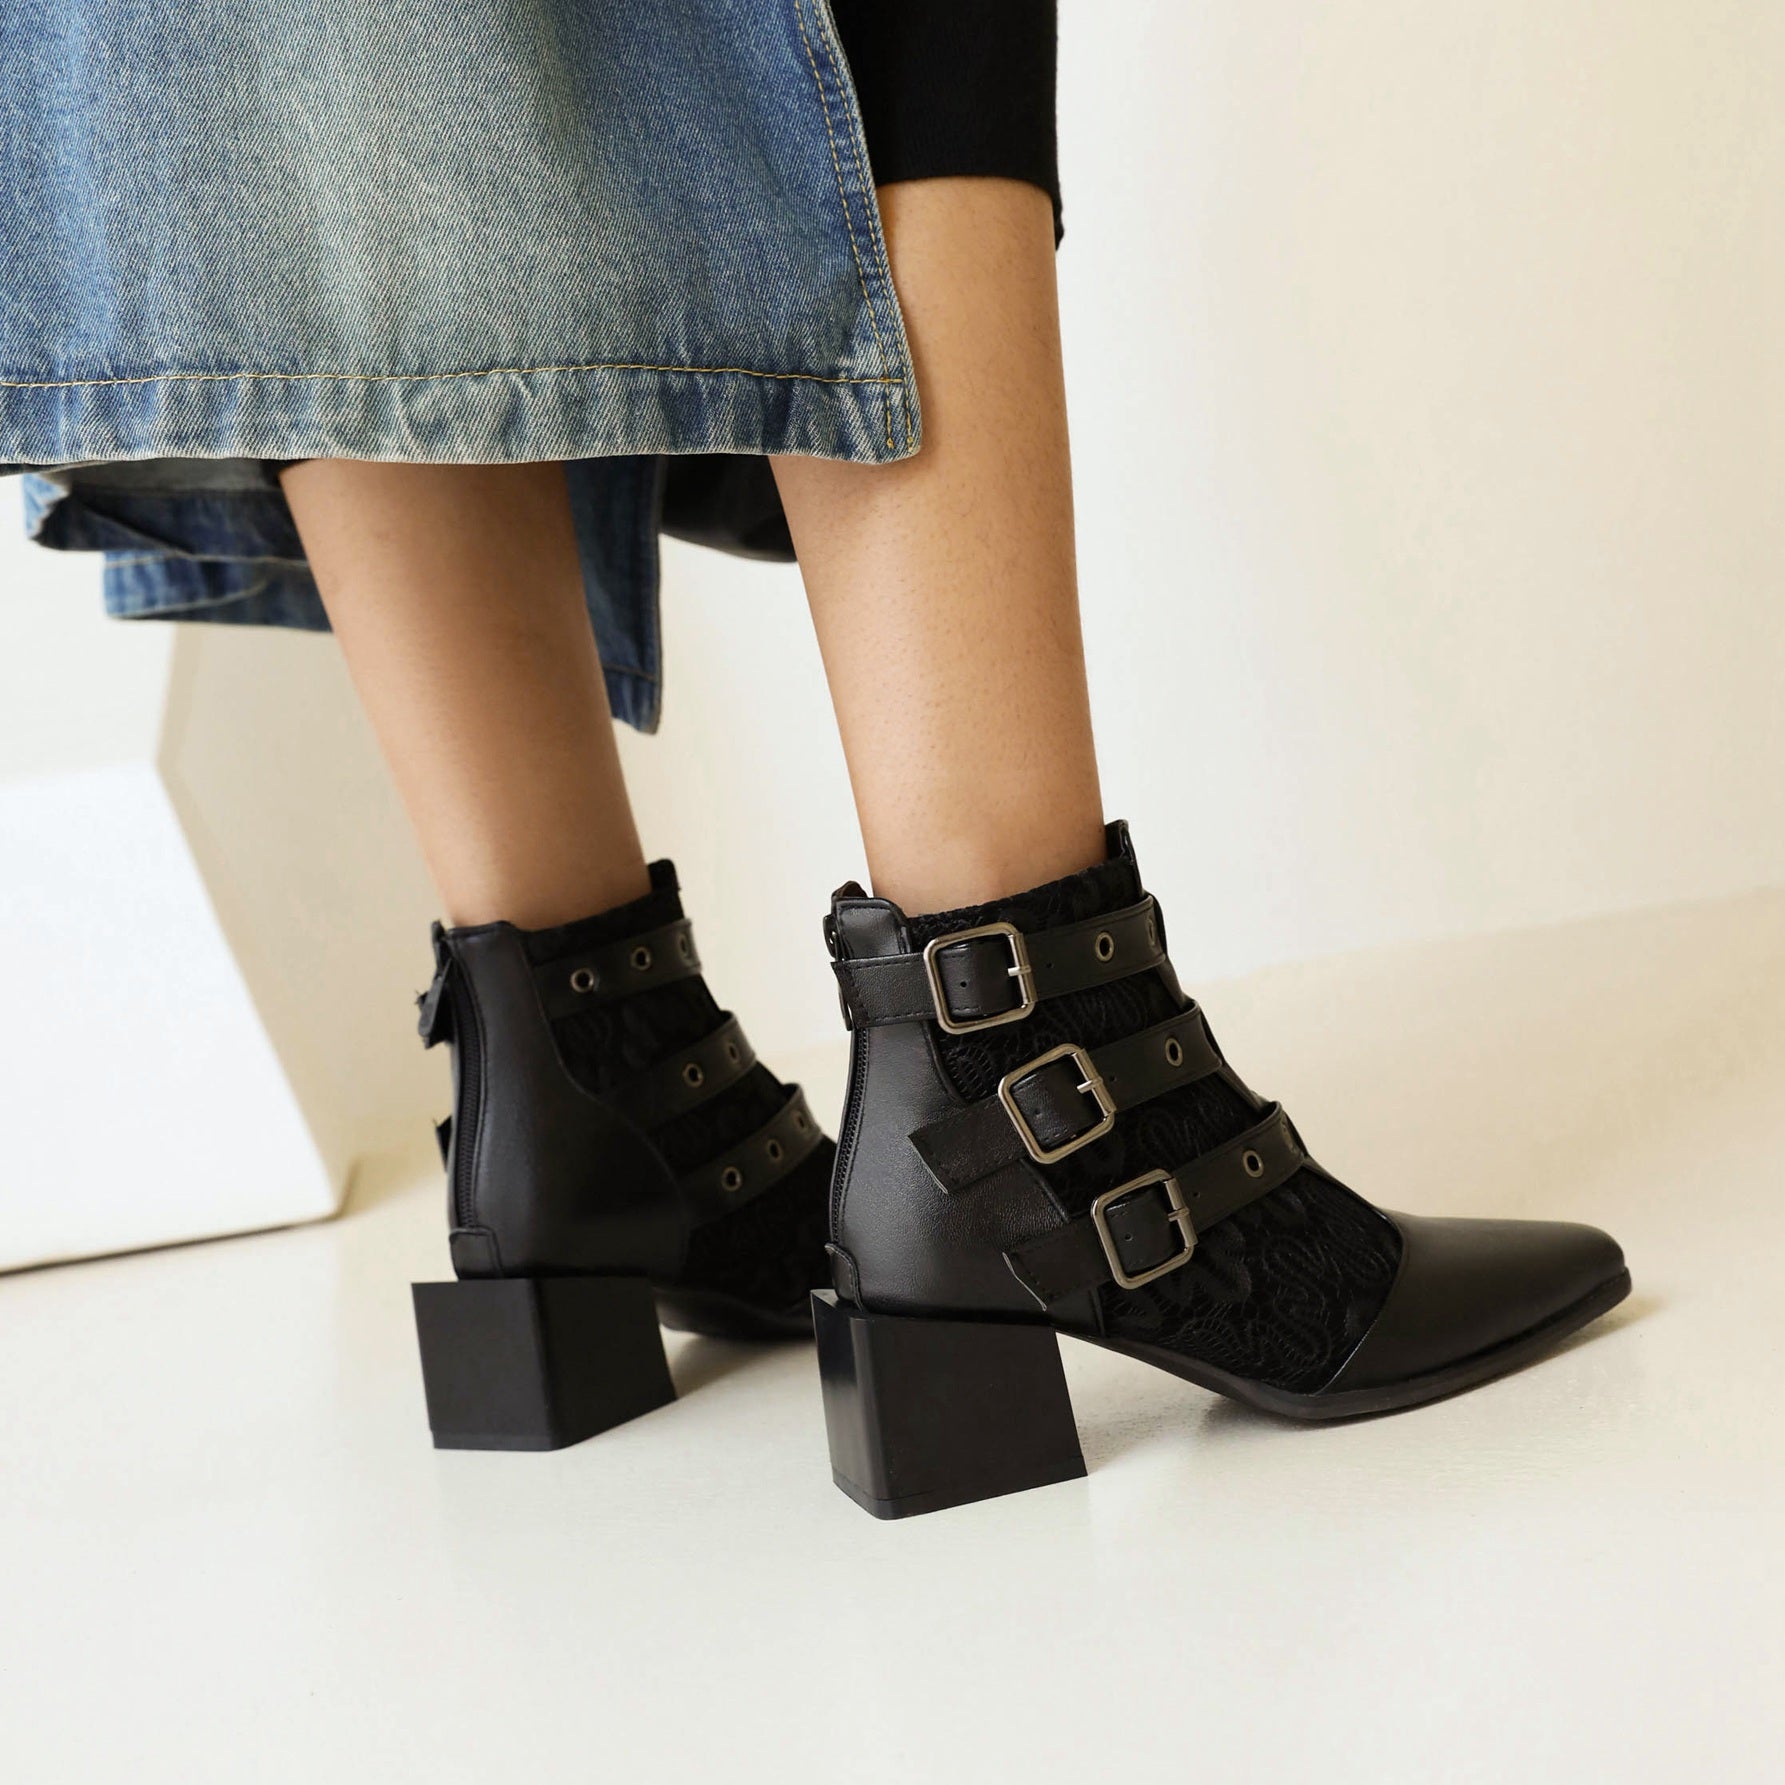 Bigsizeheels Fashion pointed square heel ankle boots - Black freeshipping - bigsizeheel®-size5-size15 -All Plus Sizes Available!